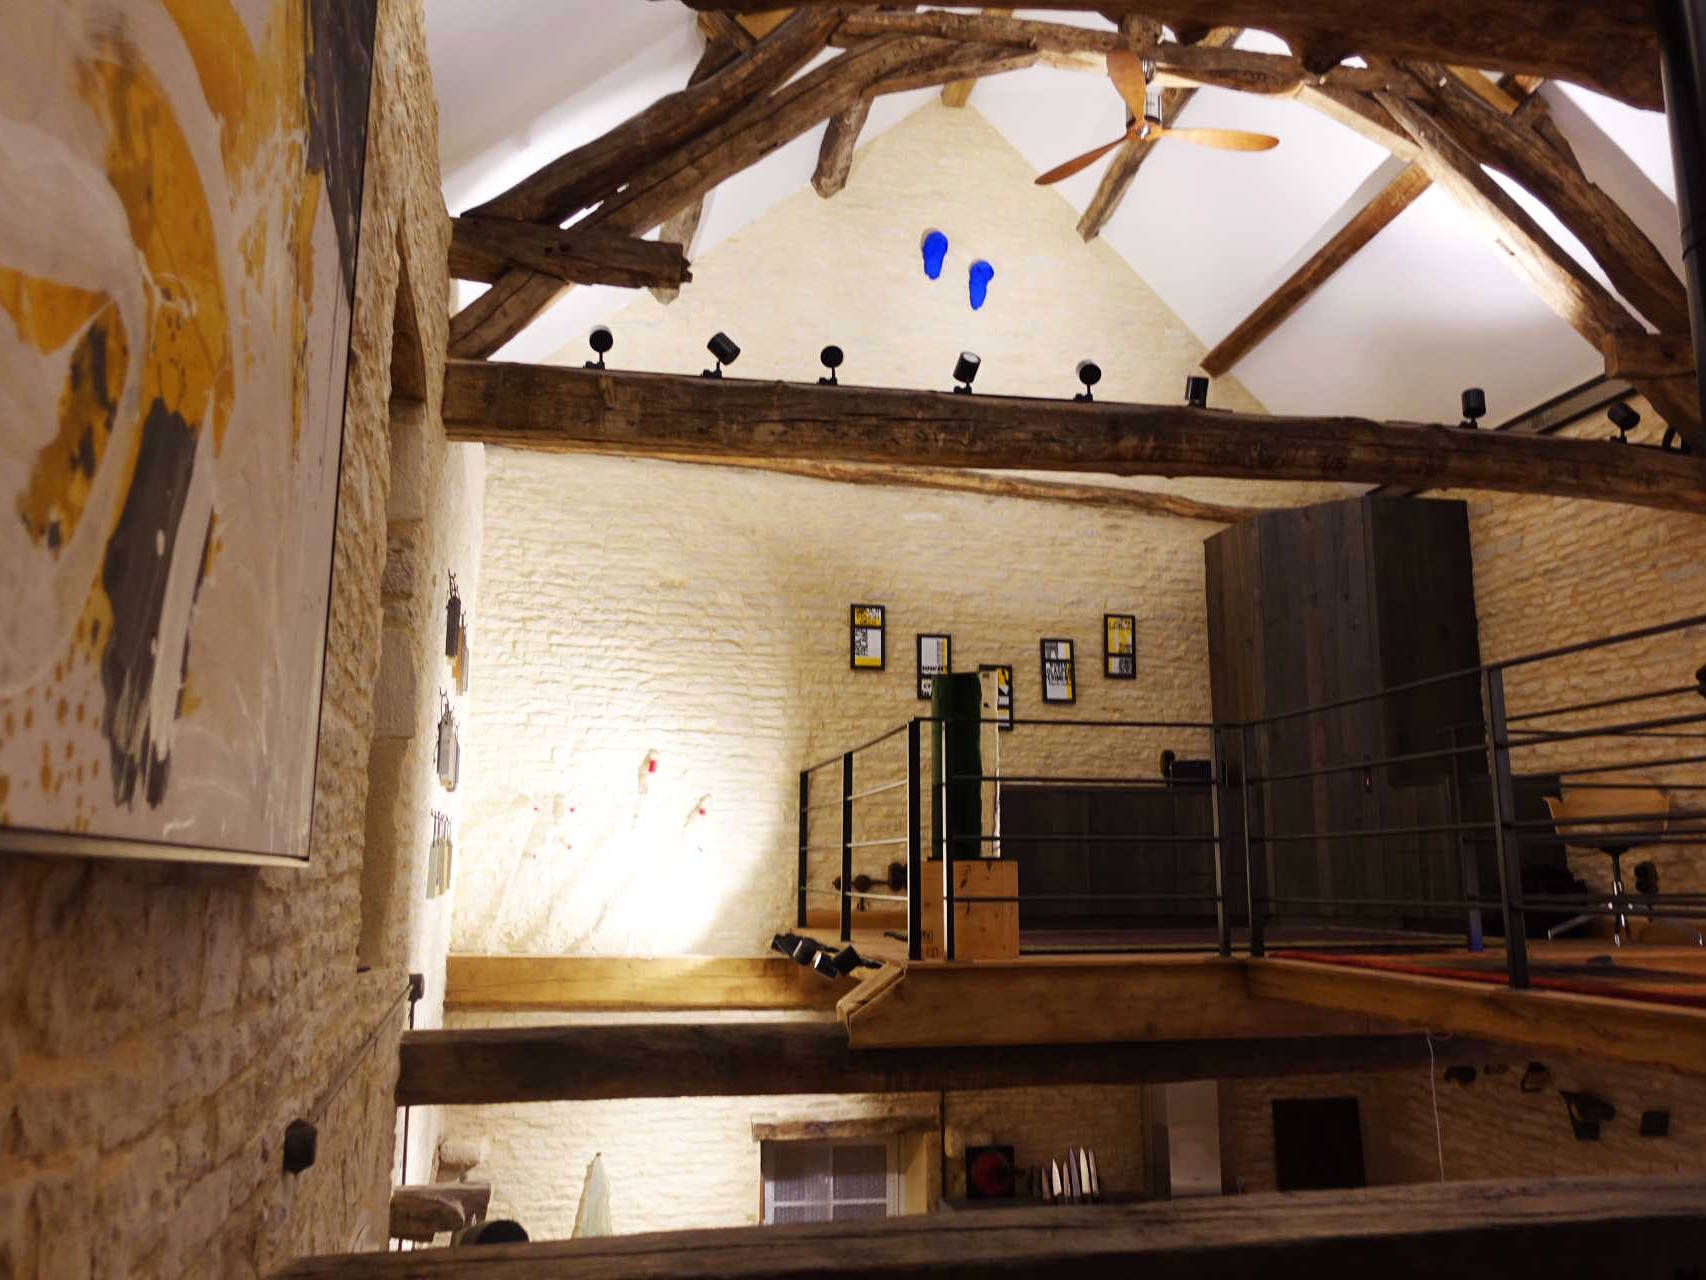 15th century barn conversion upper bedroom lofts w original hewn timber trusses